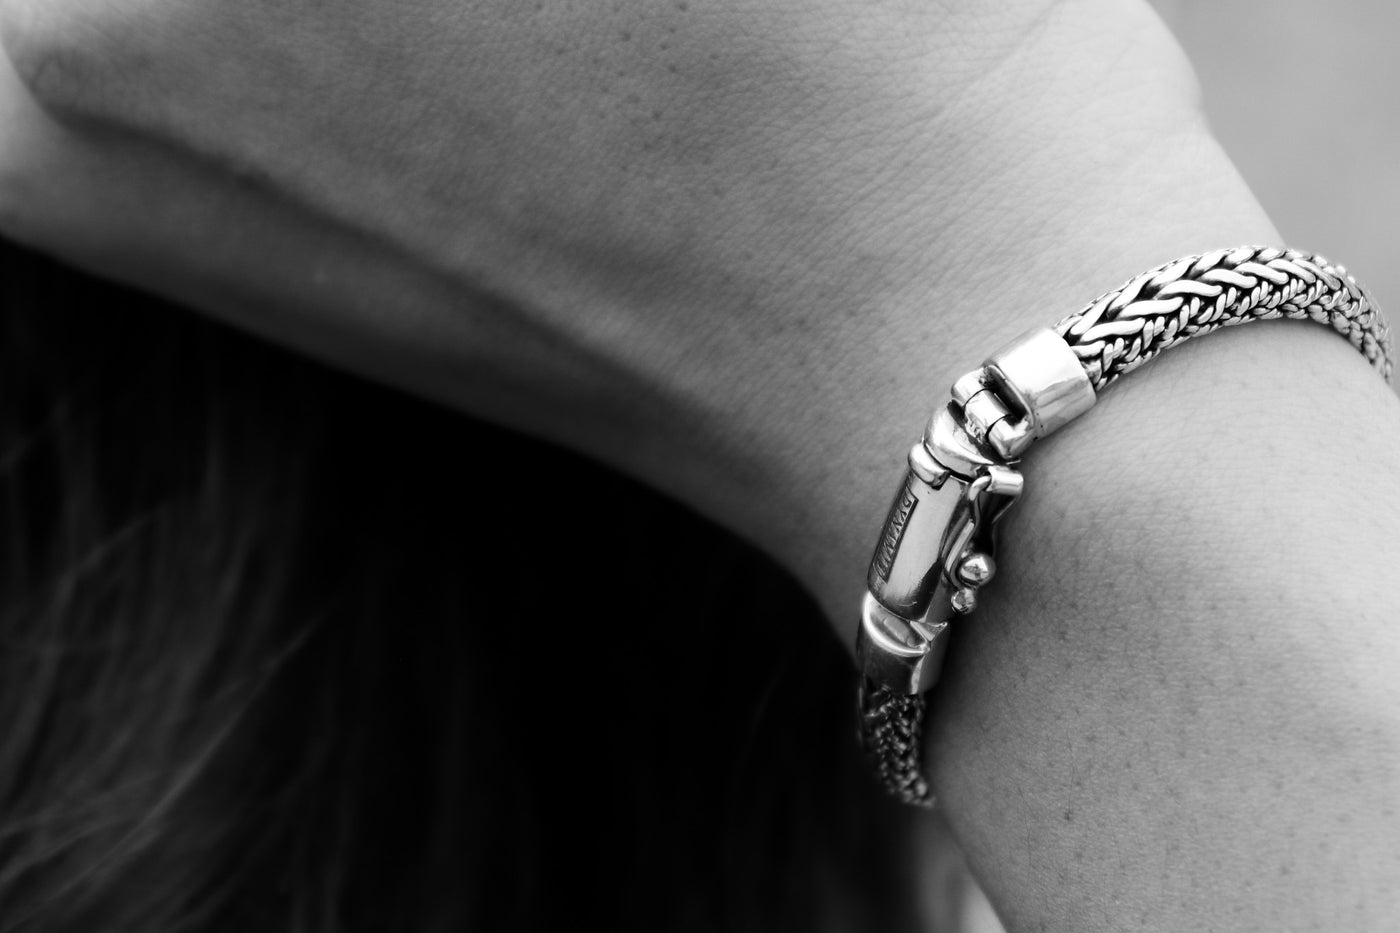 Foxtail link silver bracelet (6.5 mm)